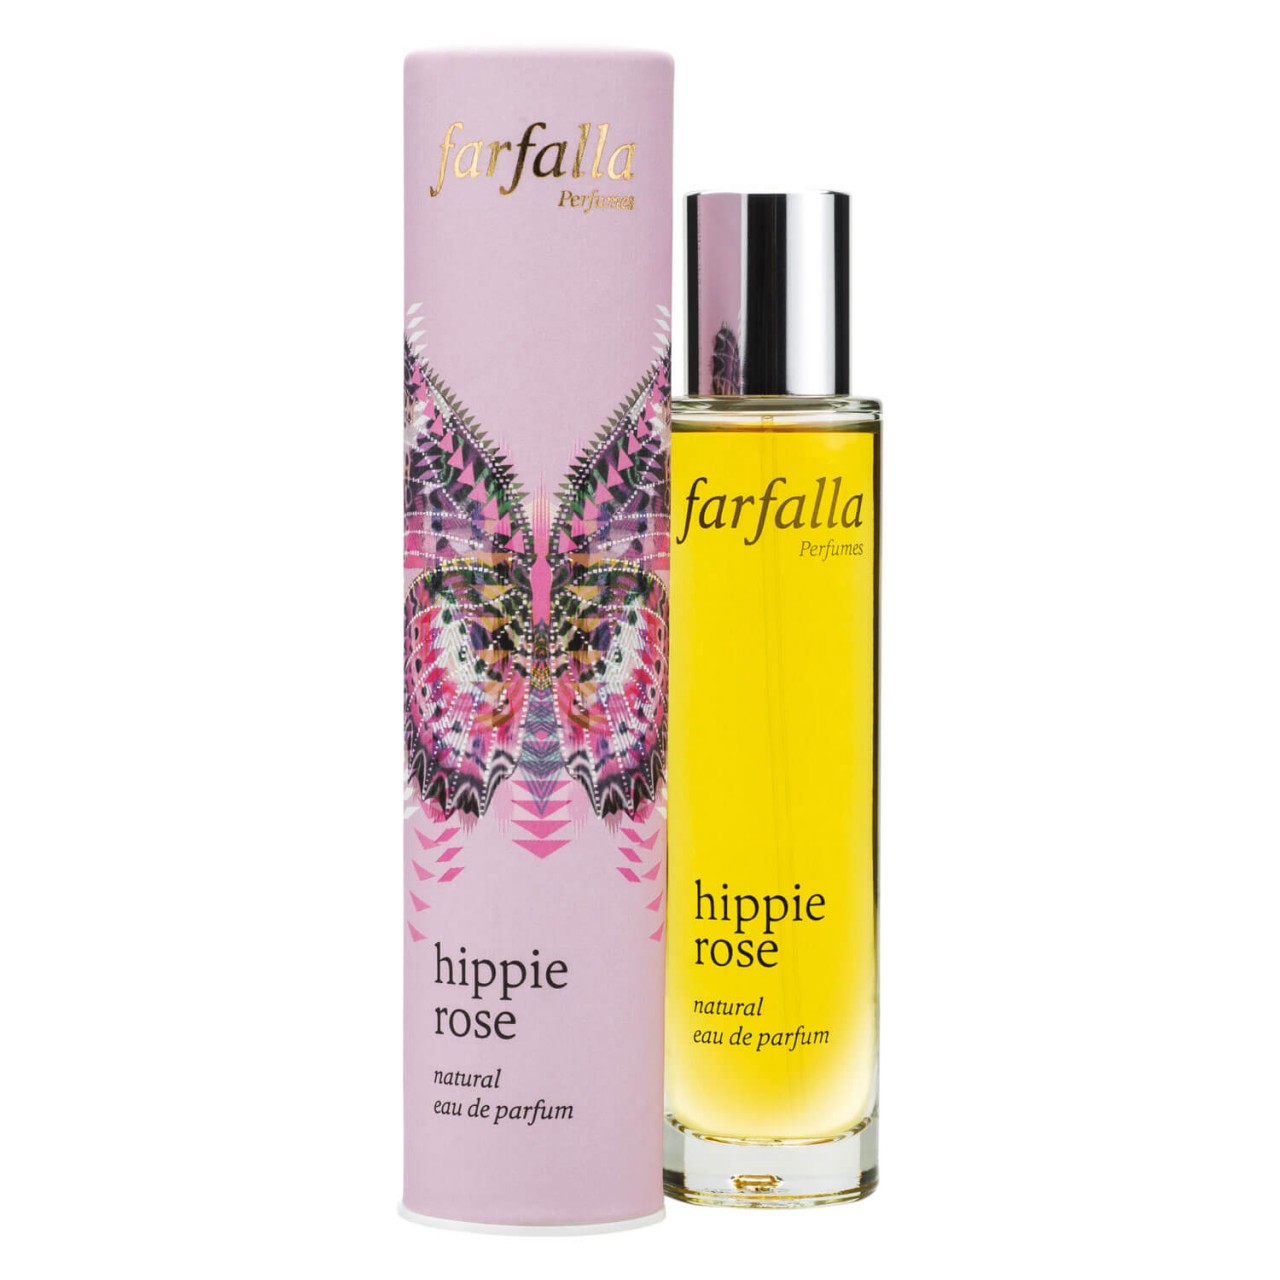 Farfalla Fragrance - Hippie Rose Natural Eau de Parfum von Farfalla